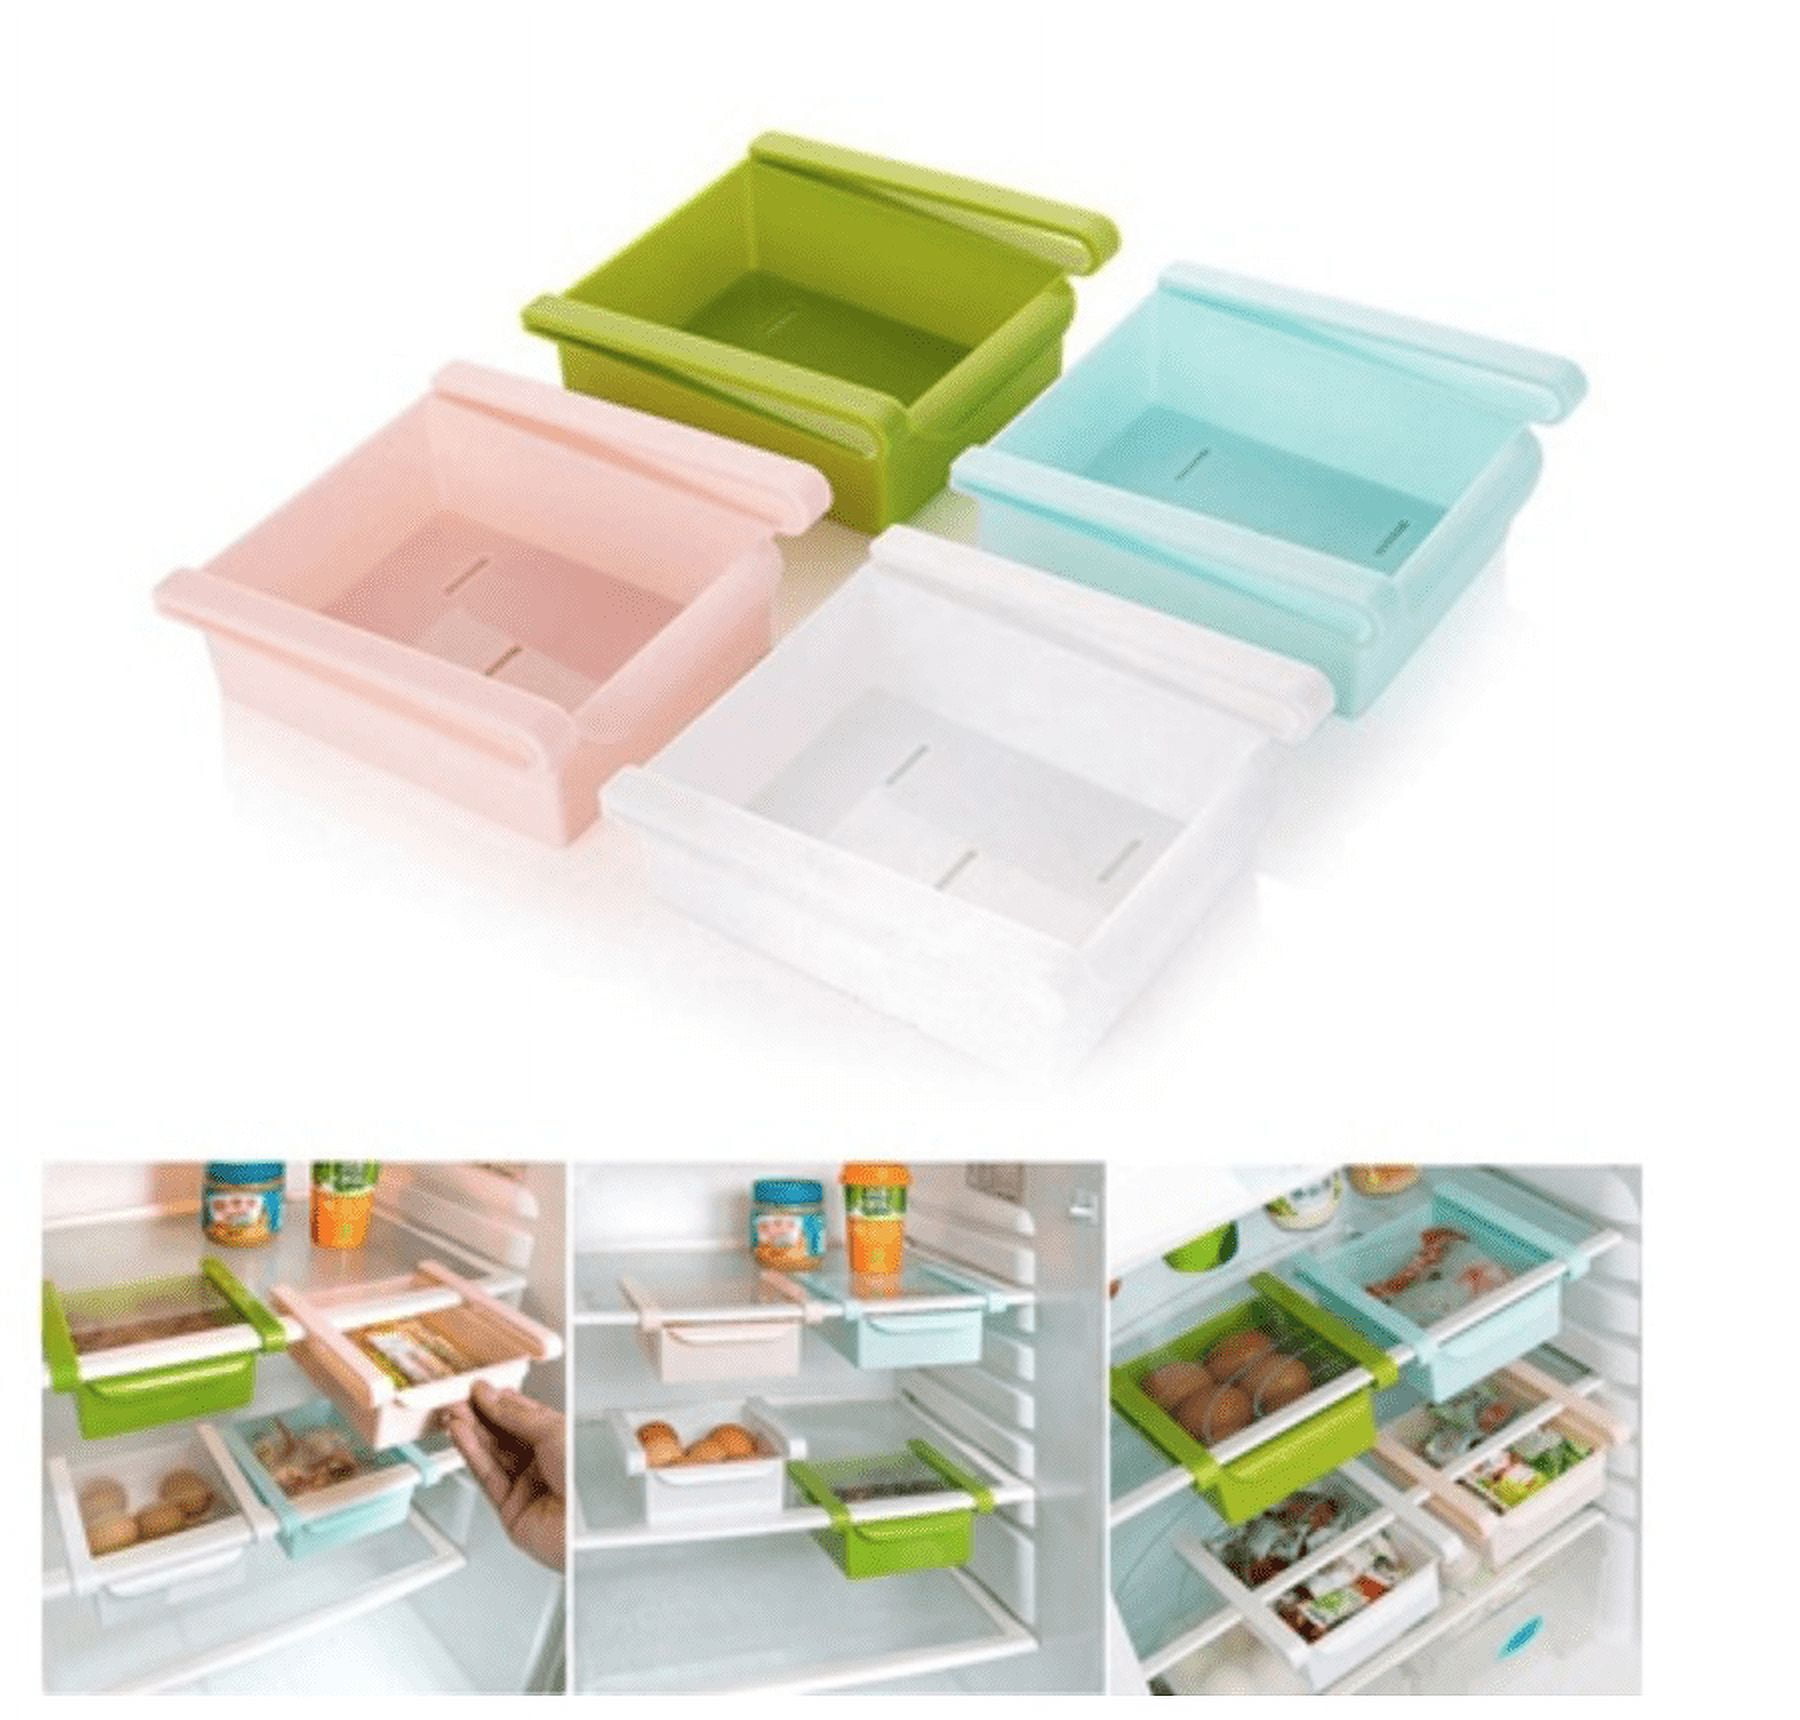 Mini ABS Slide Kitchen Fridge Freezer Space Saver Organization